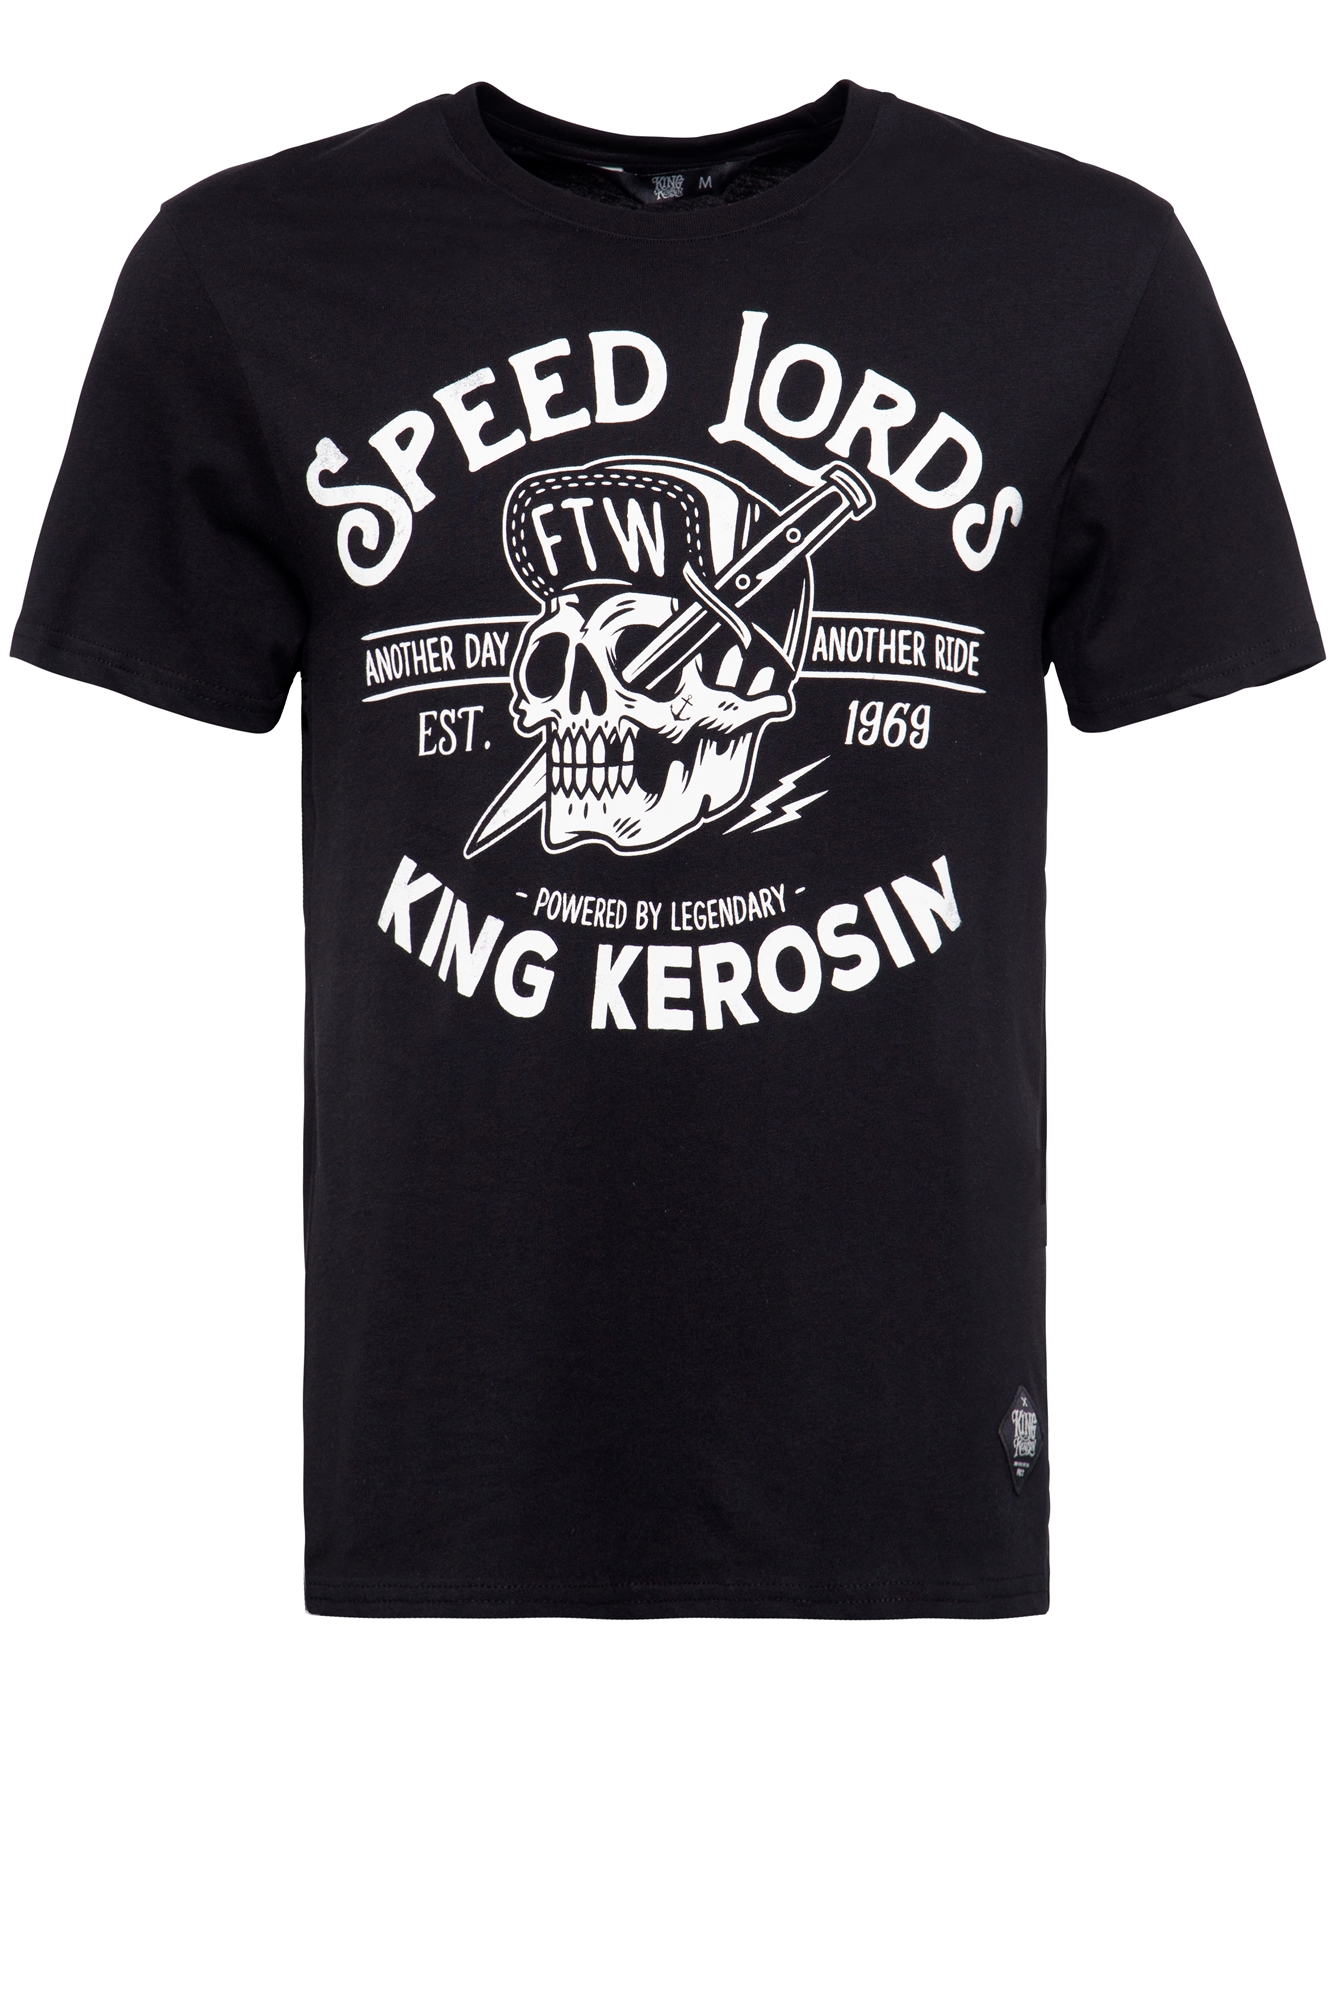 King Kerosin T-Shirt - Speed Lords S